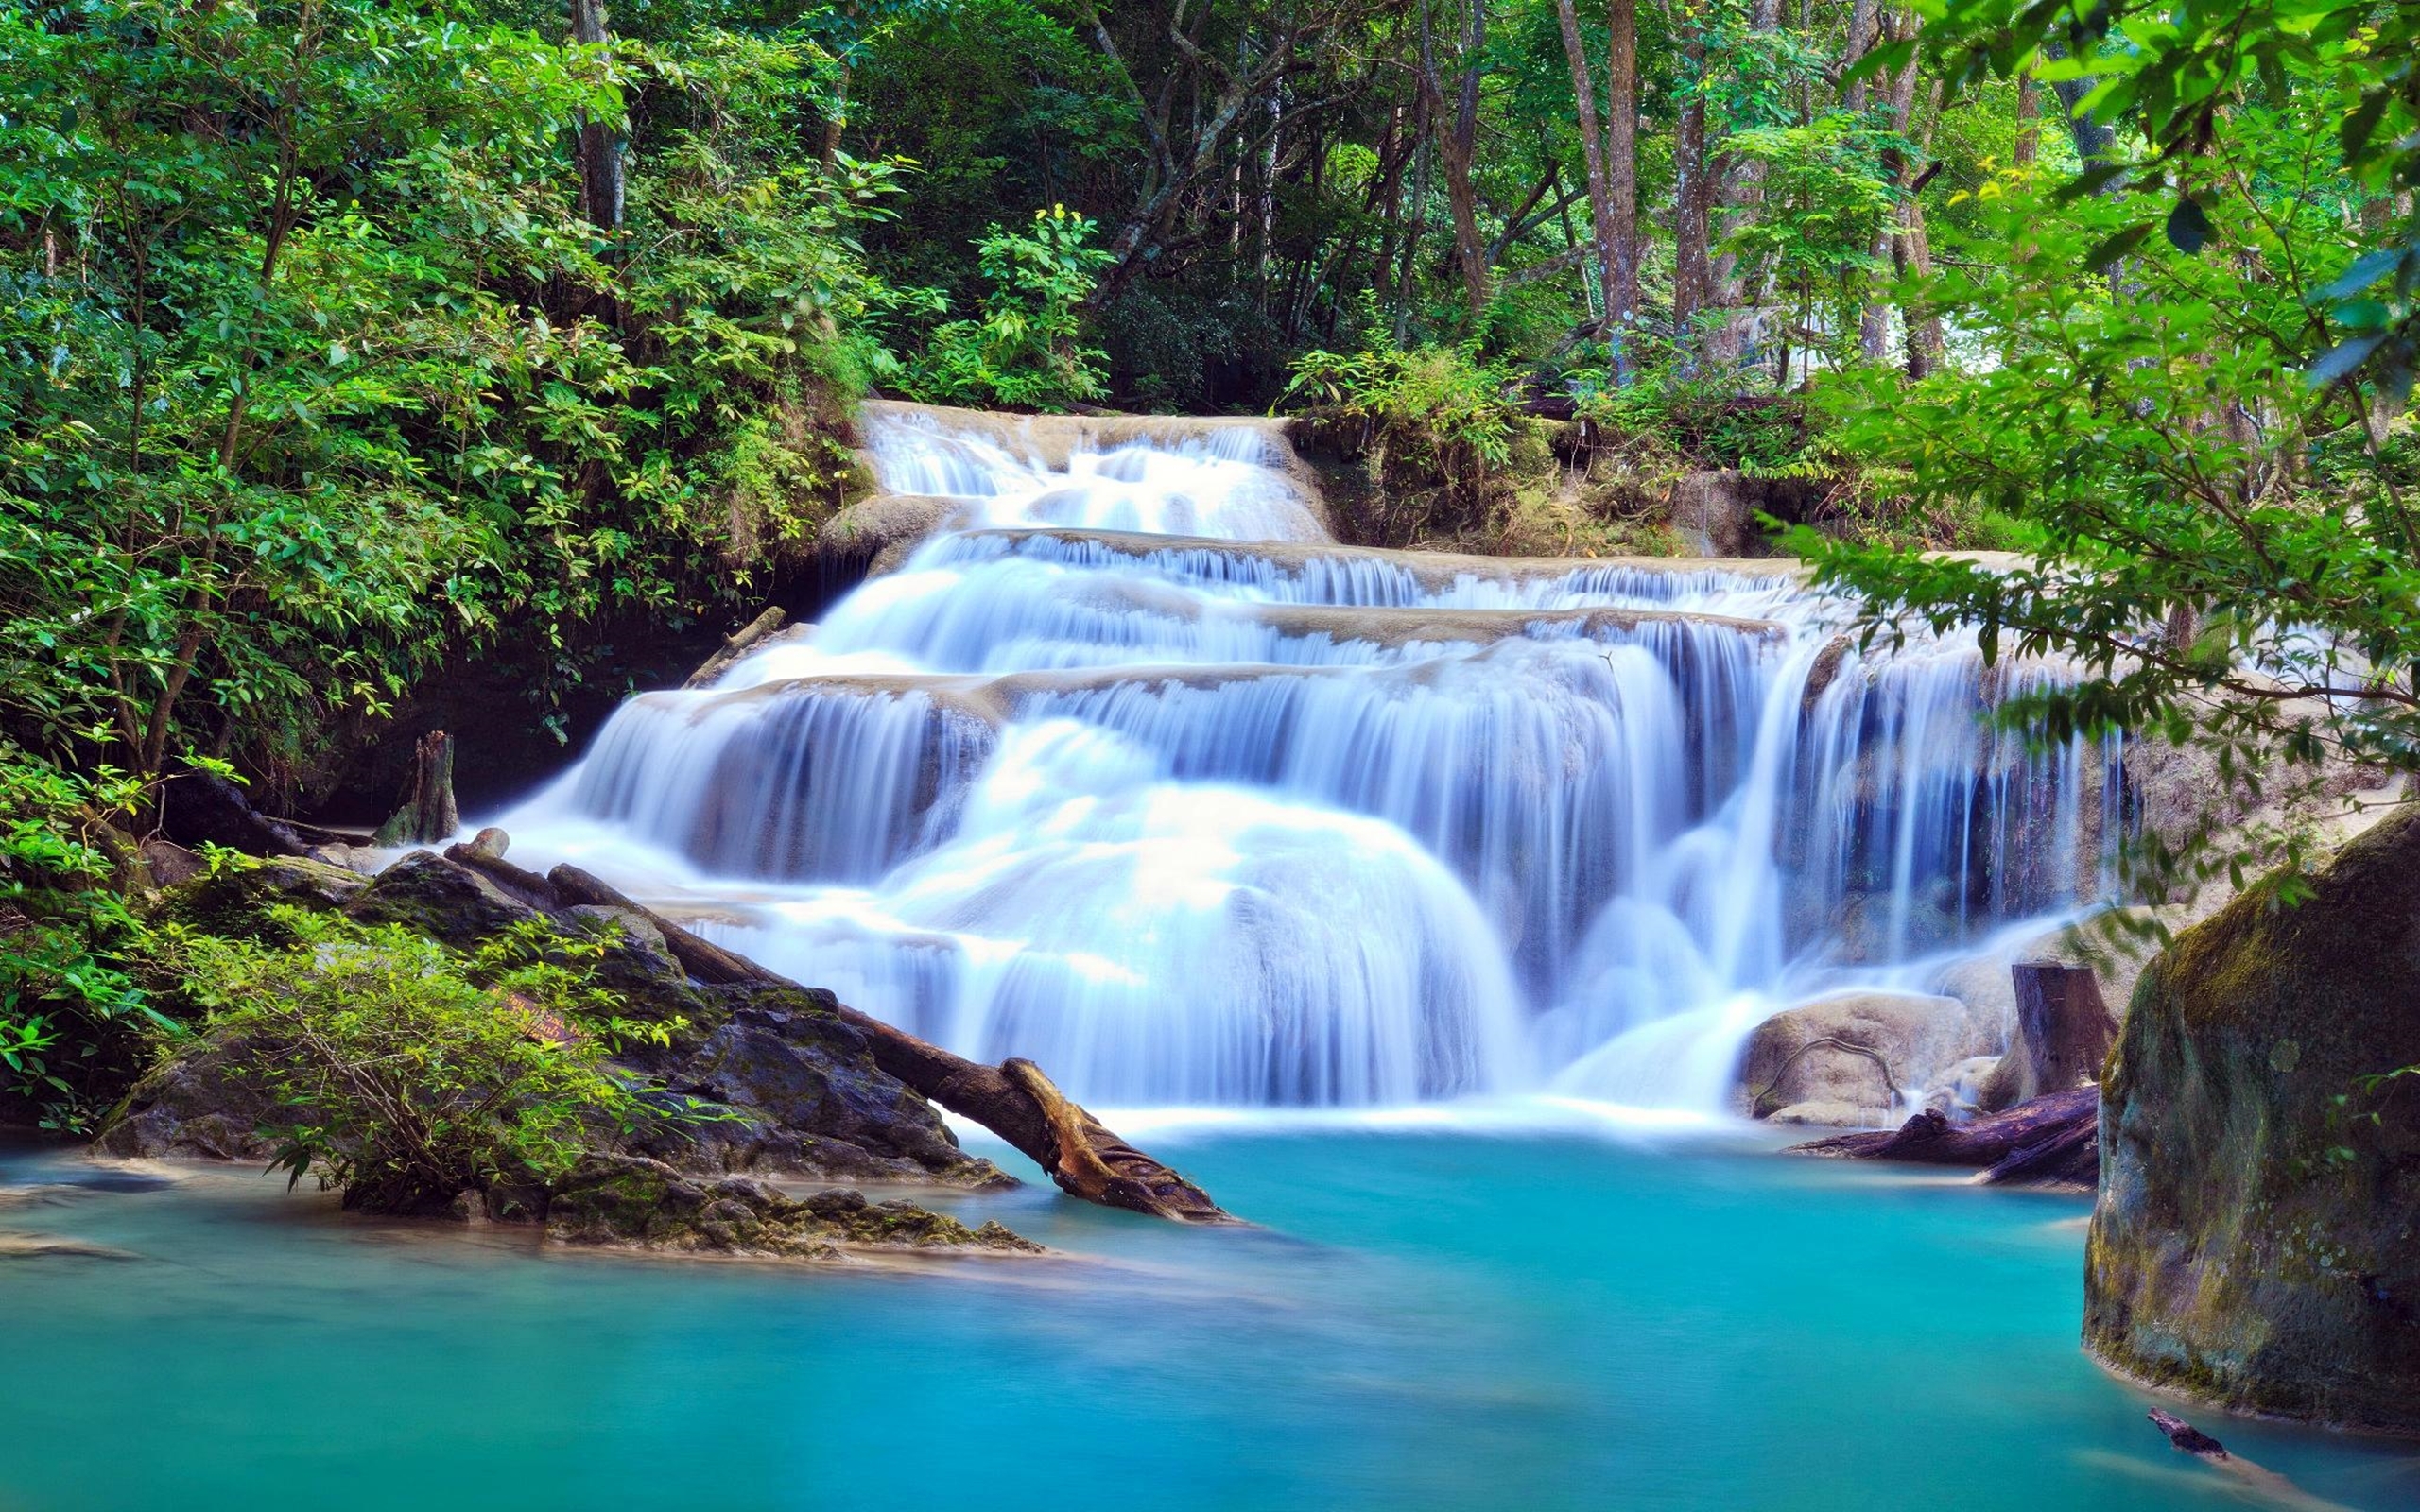 Водопад Эраван в Тайланде